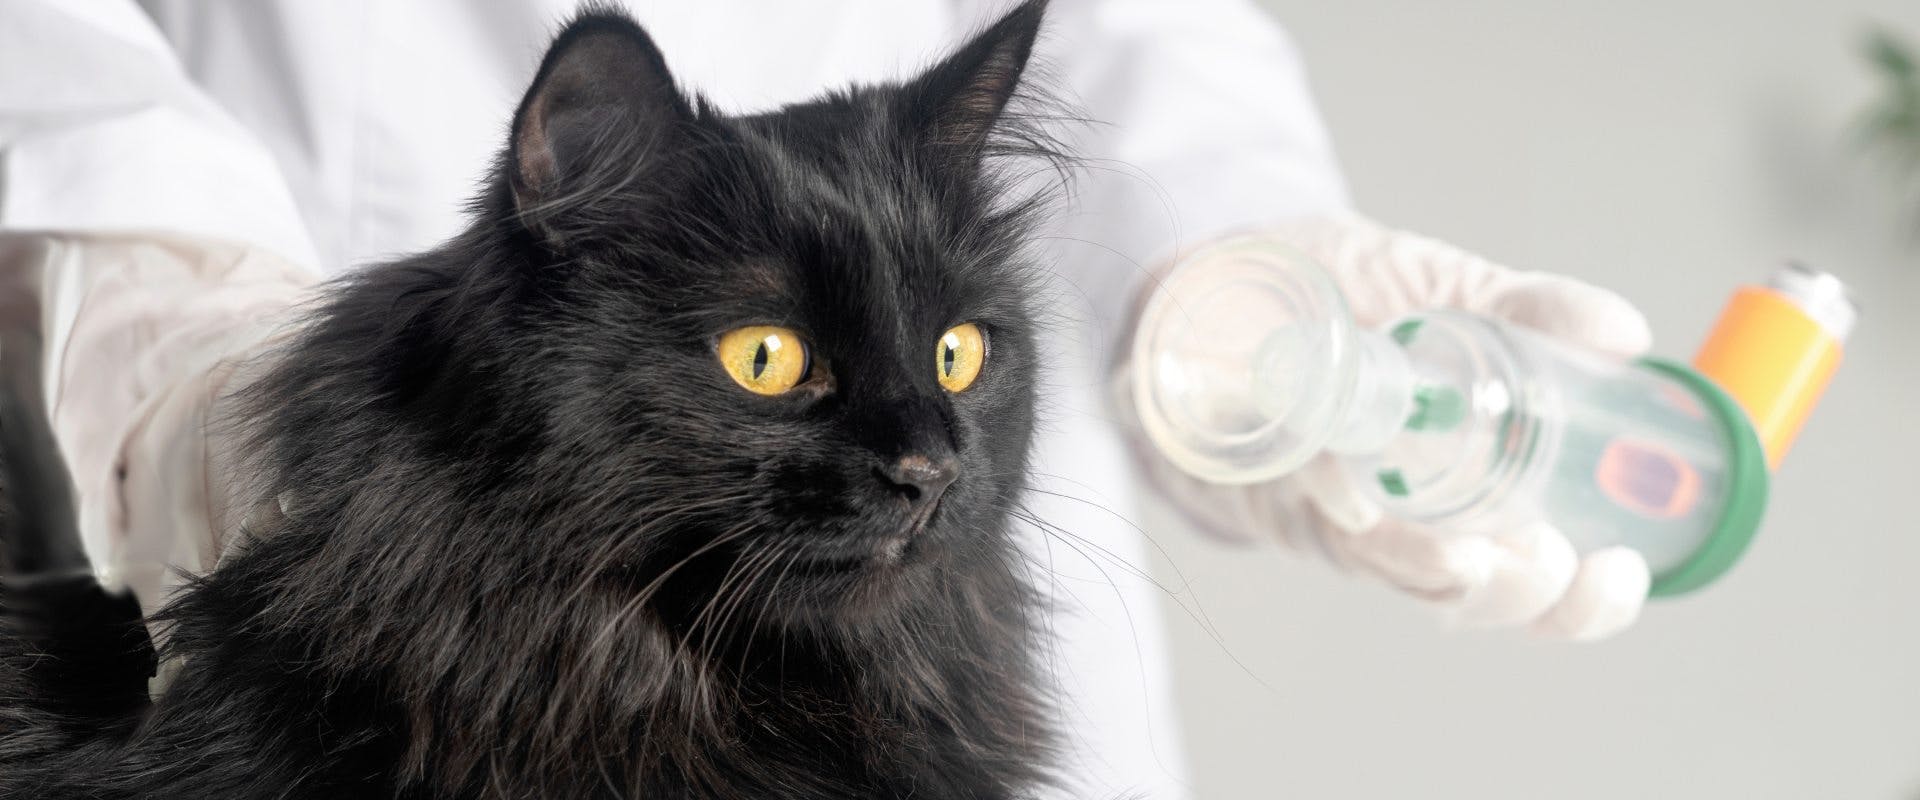 Black cat at the vet having asthma treated.